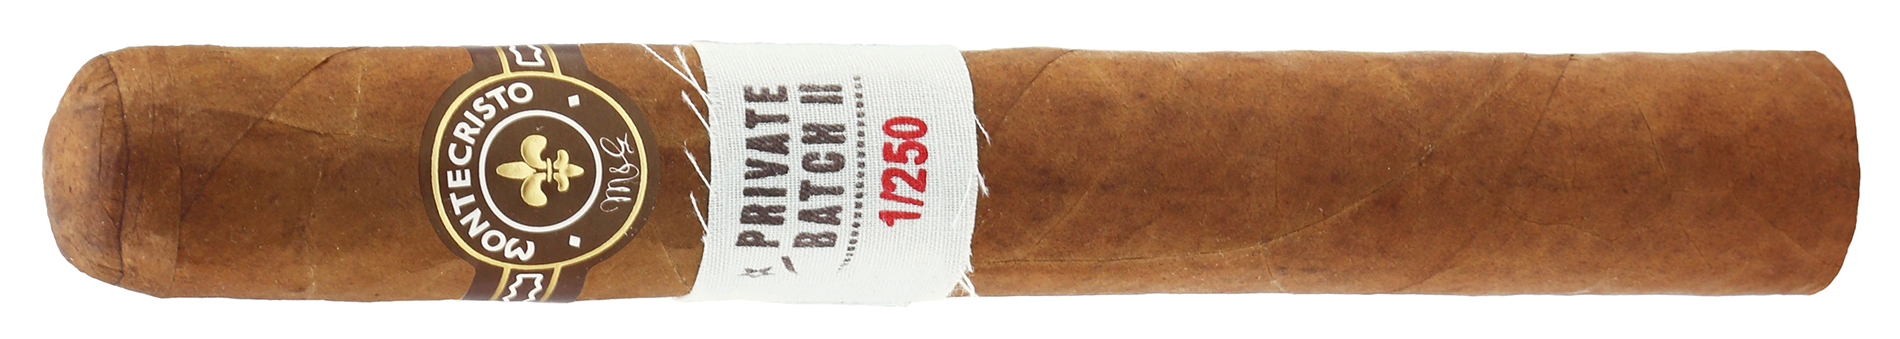 Montecristo Grupo de Maestros Private Batch 2 cigar